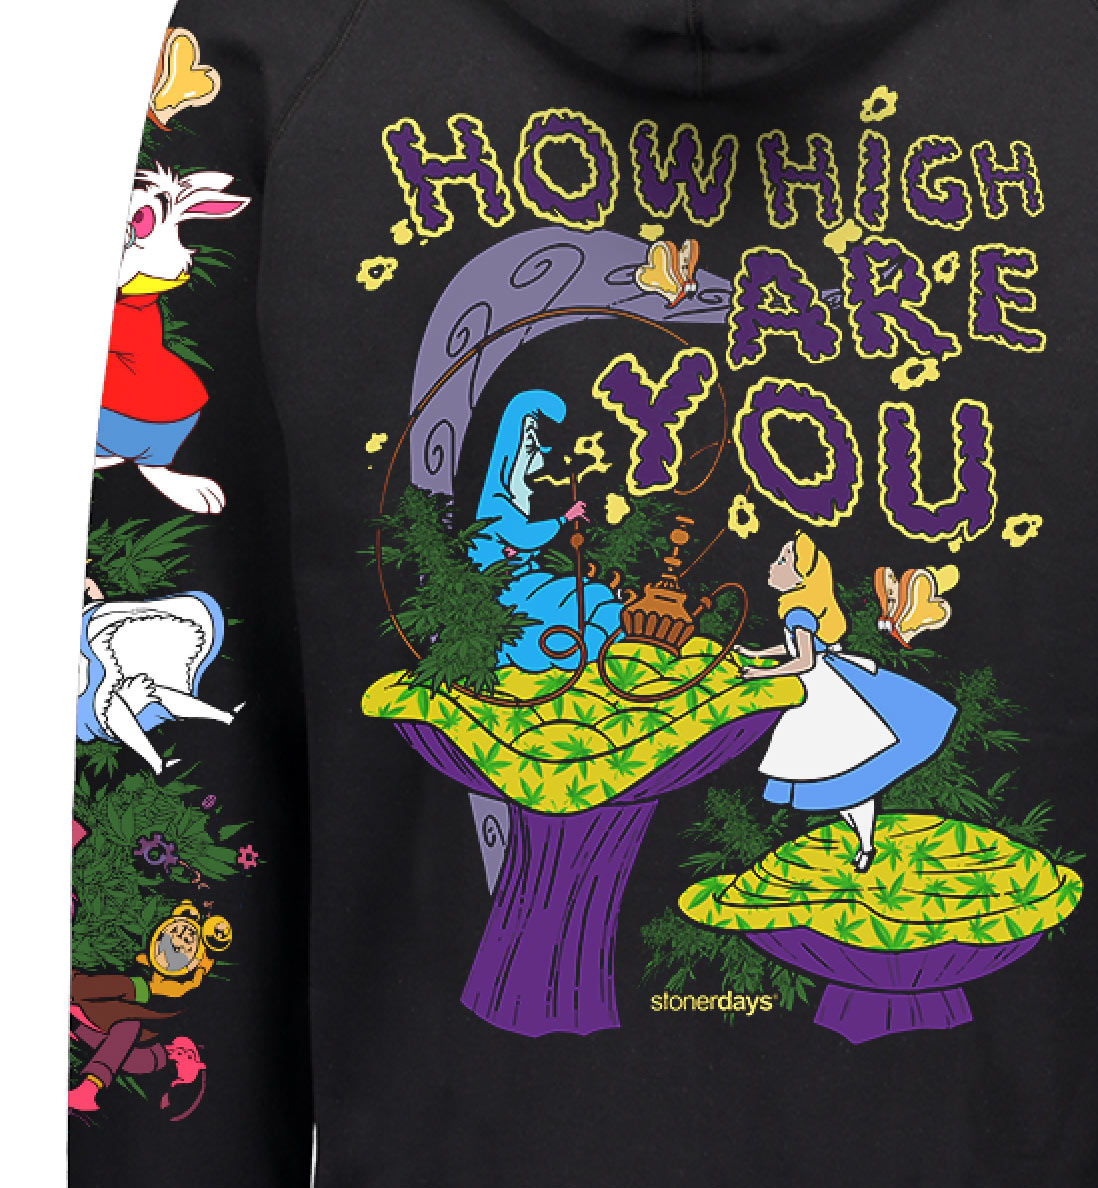 StonerDays 'We're All Mad Here' Hoodie in black with colorful Alice in Wonderland print